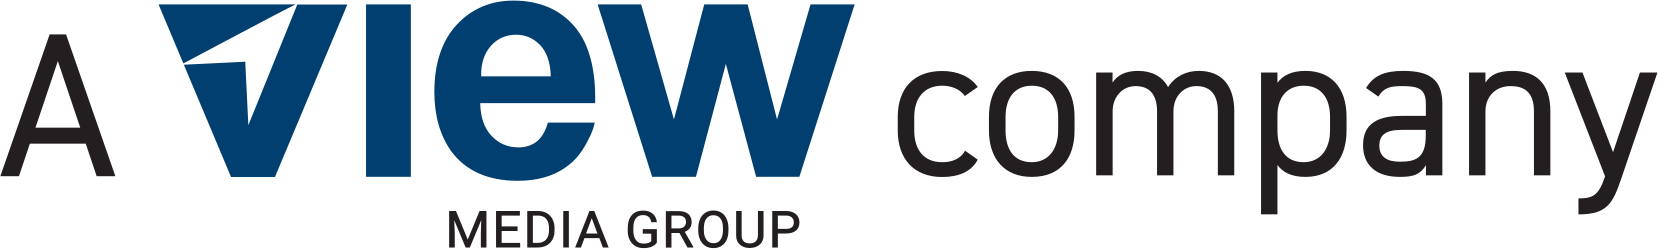 A View Media Group Company